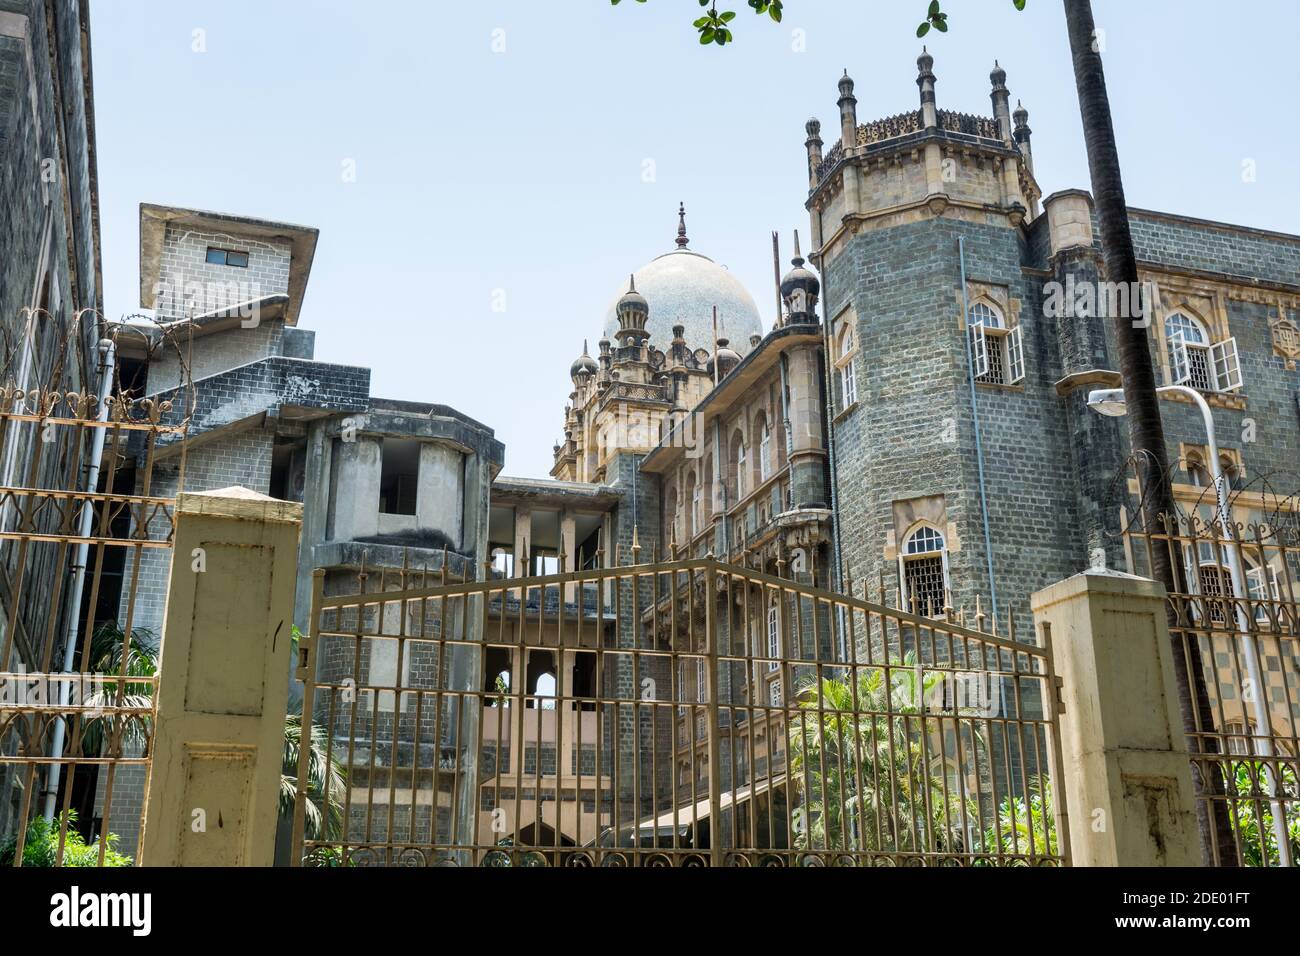 Hauptgebäude von Chhatrapati Shivaji Maharaj Vastu Sangrahalaya, früher der Prinz von Wales Museum, das wichtigste Museum in Mumbai, Maharashtra, Indien. Stockfoto